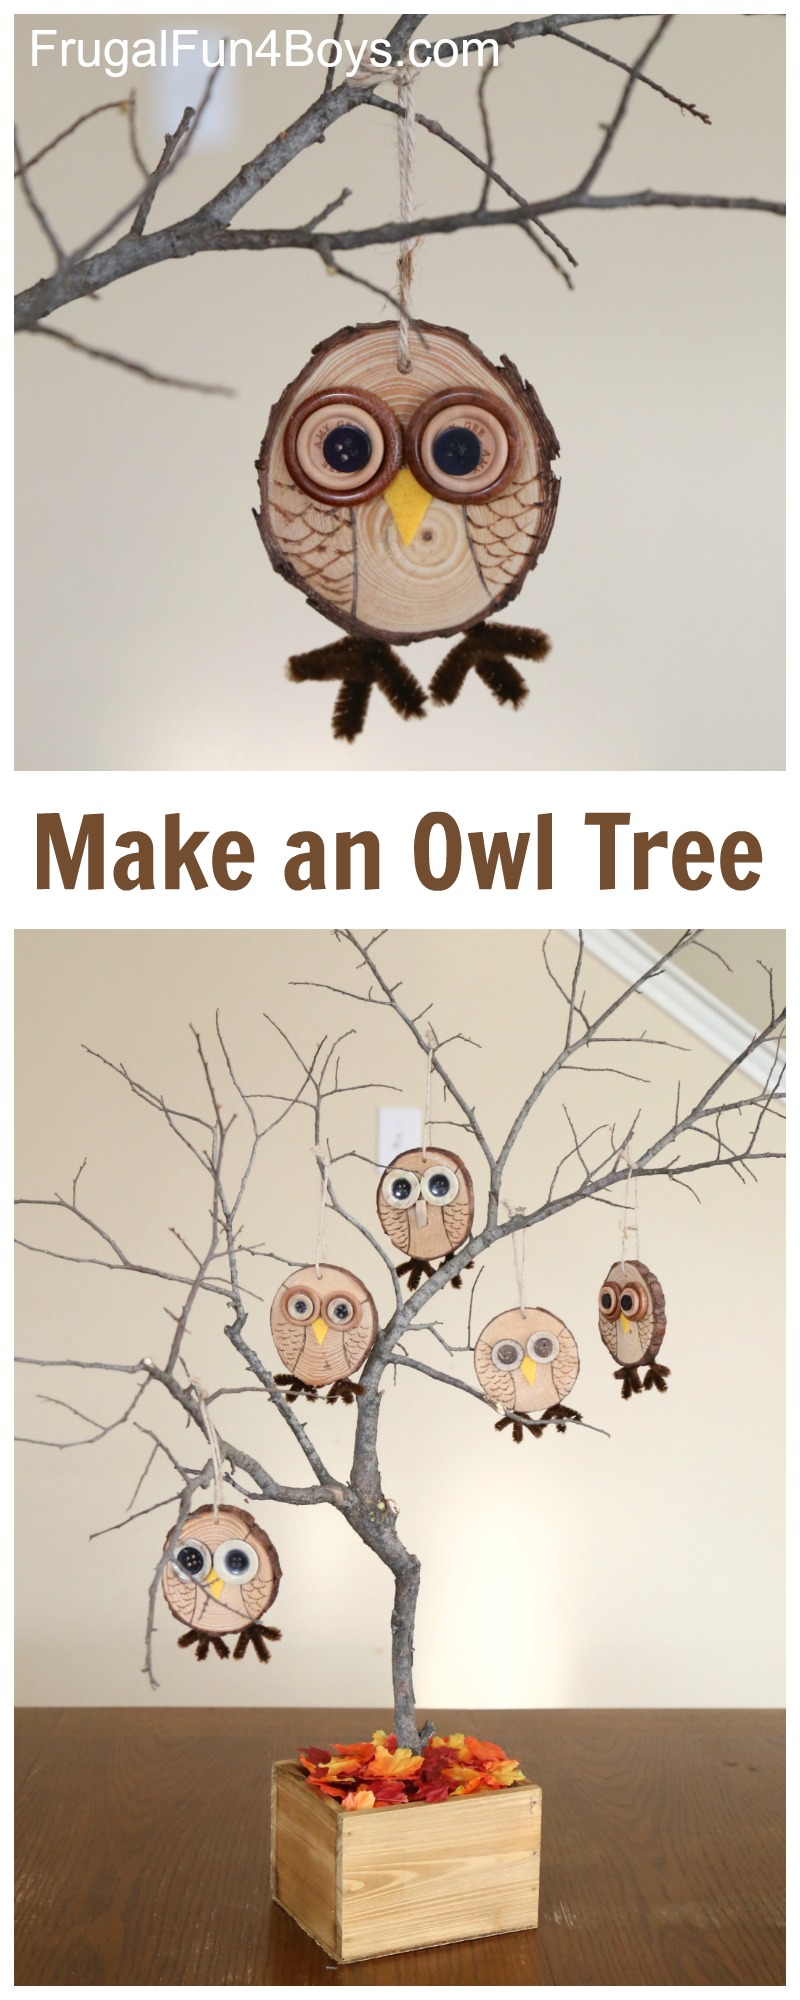 Make an Owl Tree with Wood Slice Owl Ornaments - Fun Fall Craft!